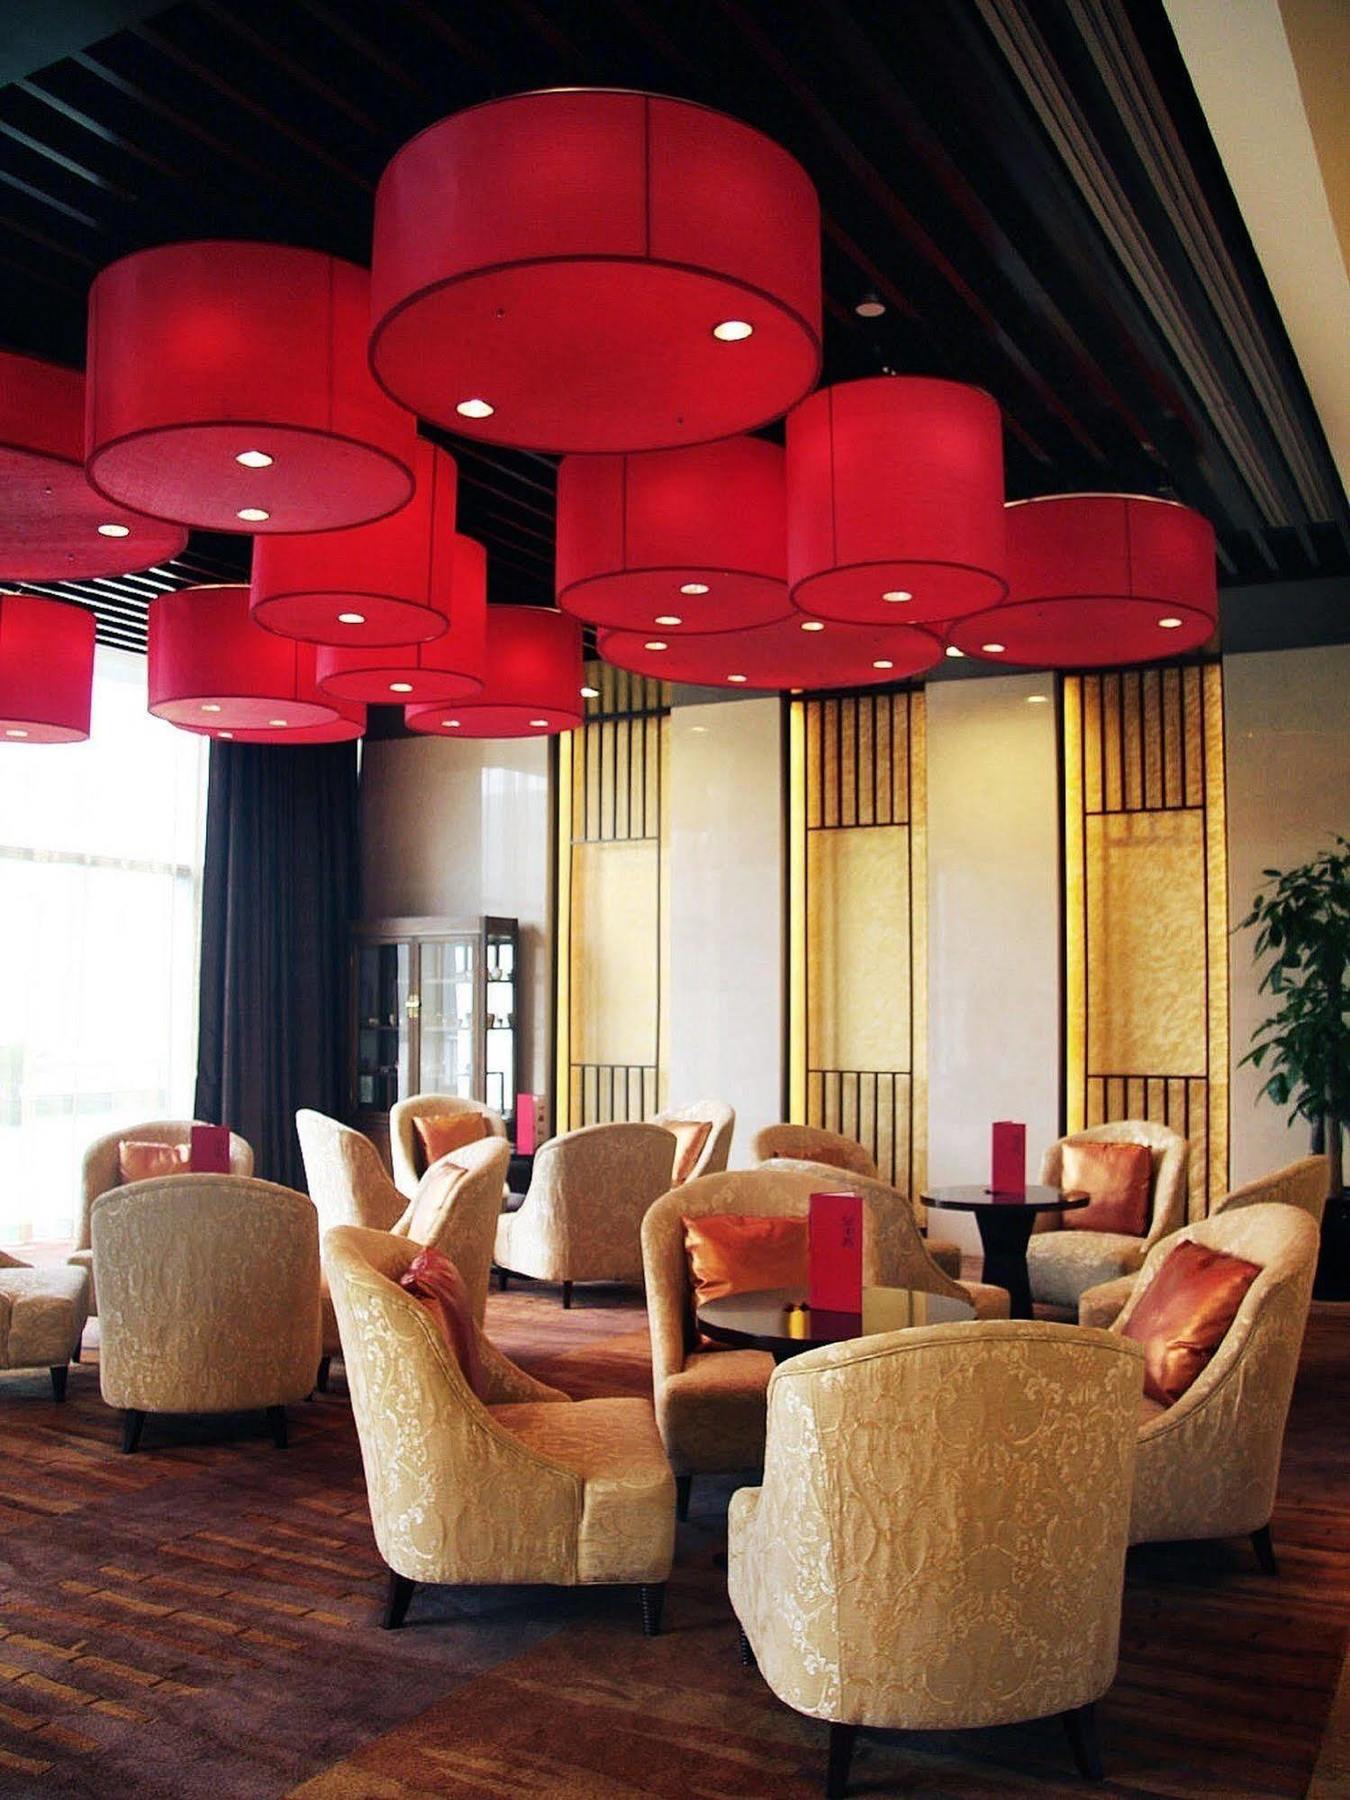 China National Convention Center Grand Hotel Beijing Restaurant photo